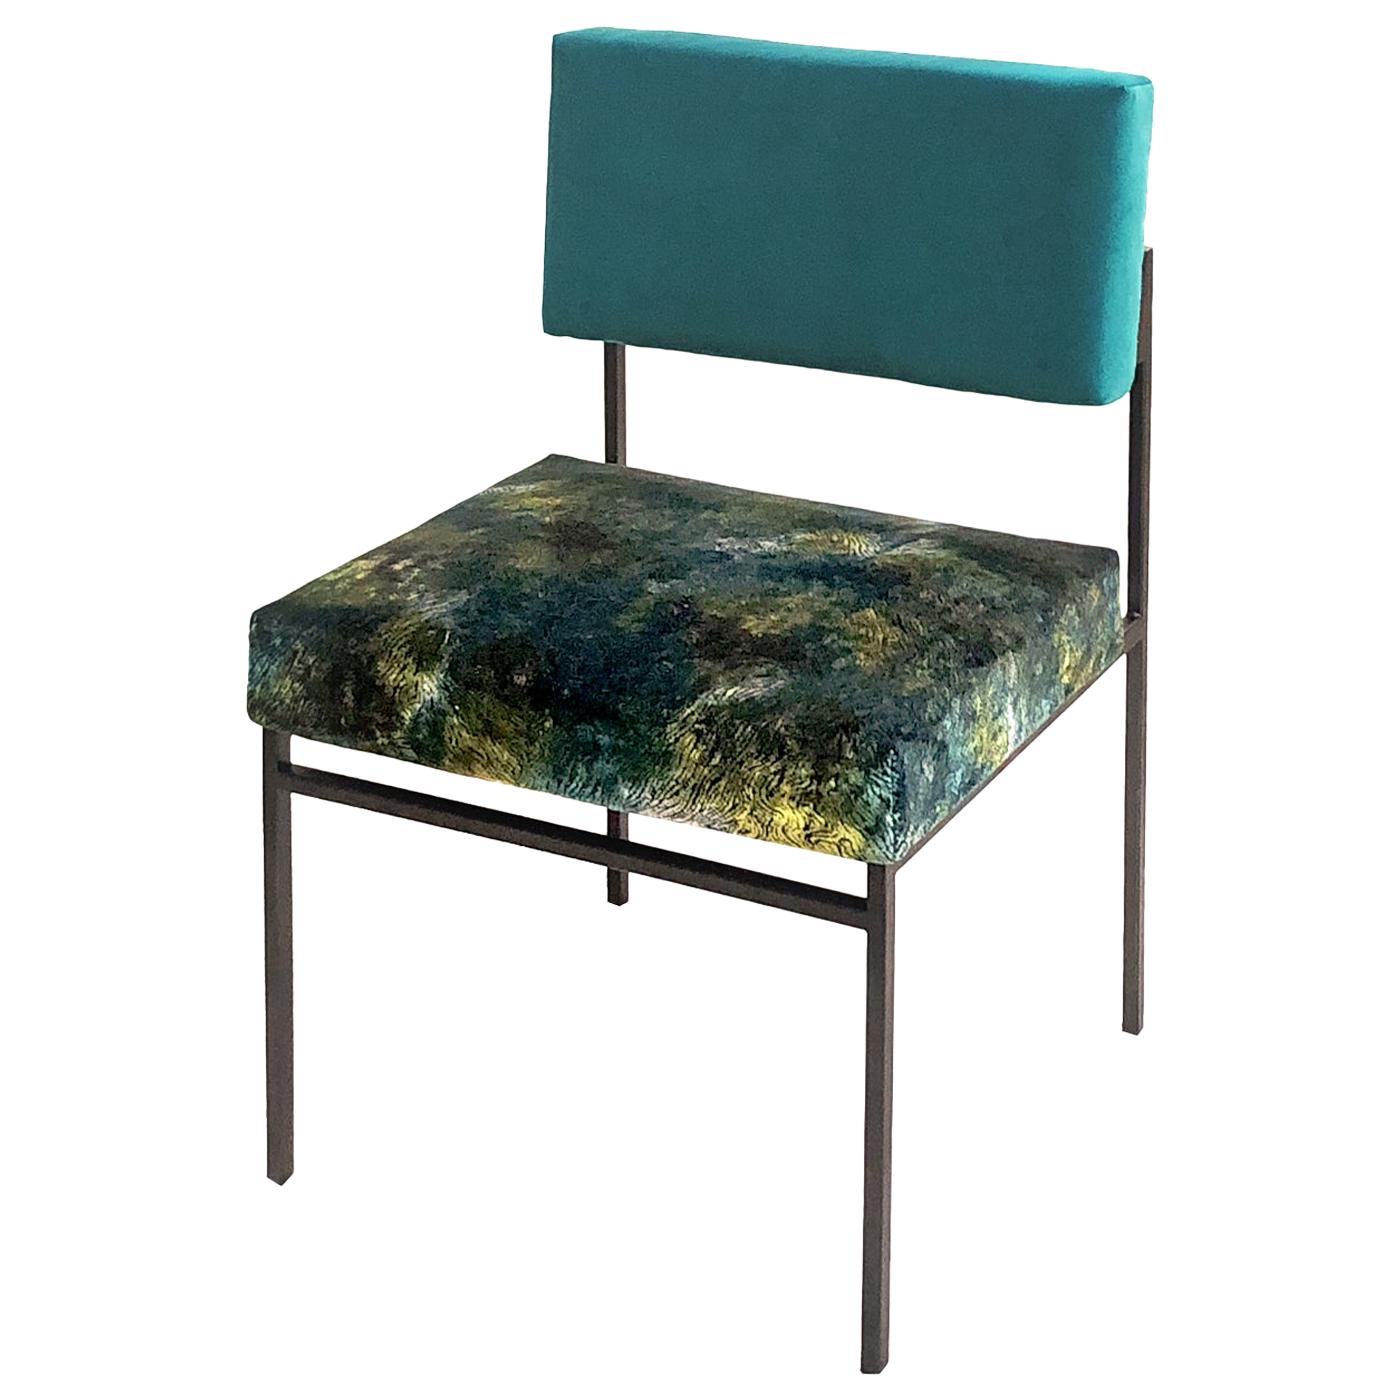 Aurea Green Velvet Chair by CtrlZak and Davide Barzaghi